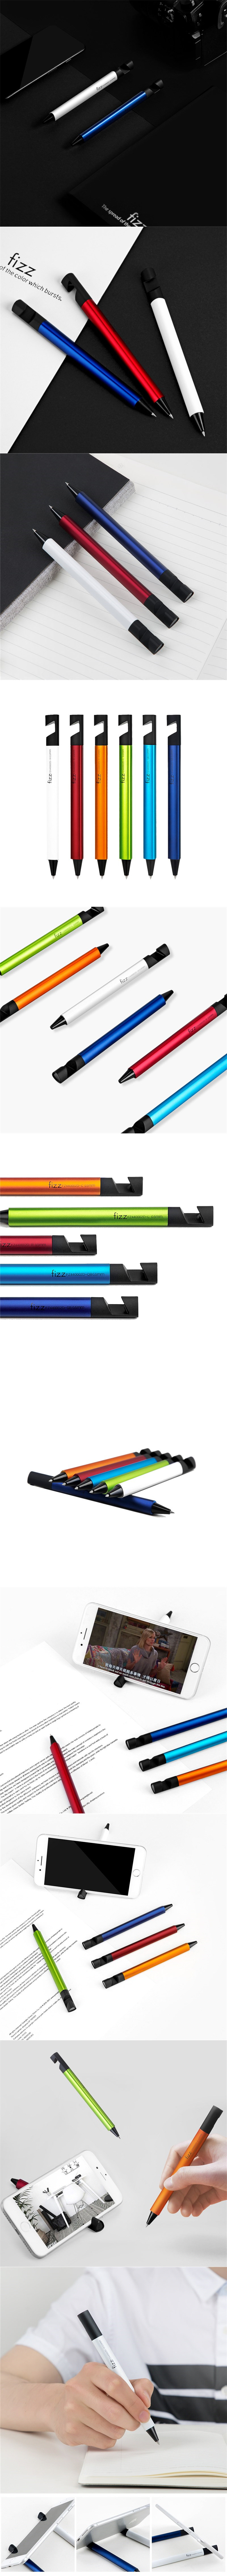 XIAOMI-Fizz-1PC-Multifunctional-2-In-1-Gel-Pen--Mobile-Phone-Holder-05mm-Rotating-Gel-Pen-Black-Ink--1485115-1